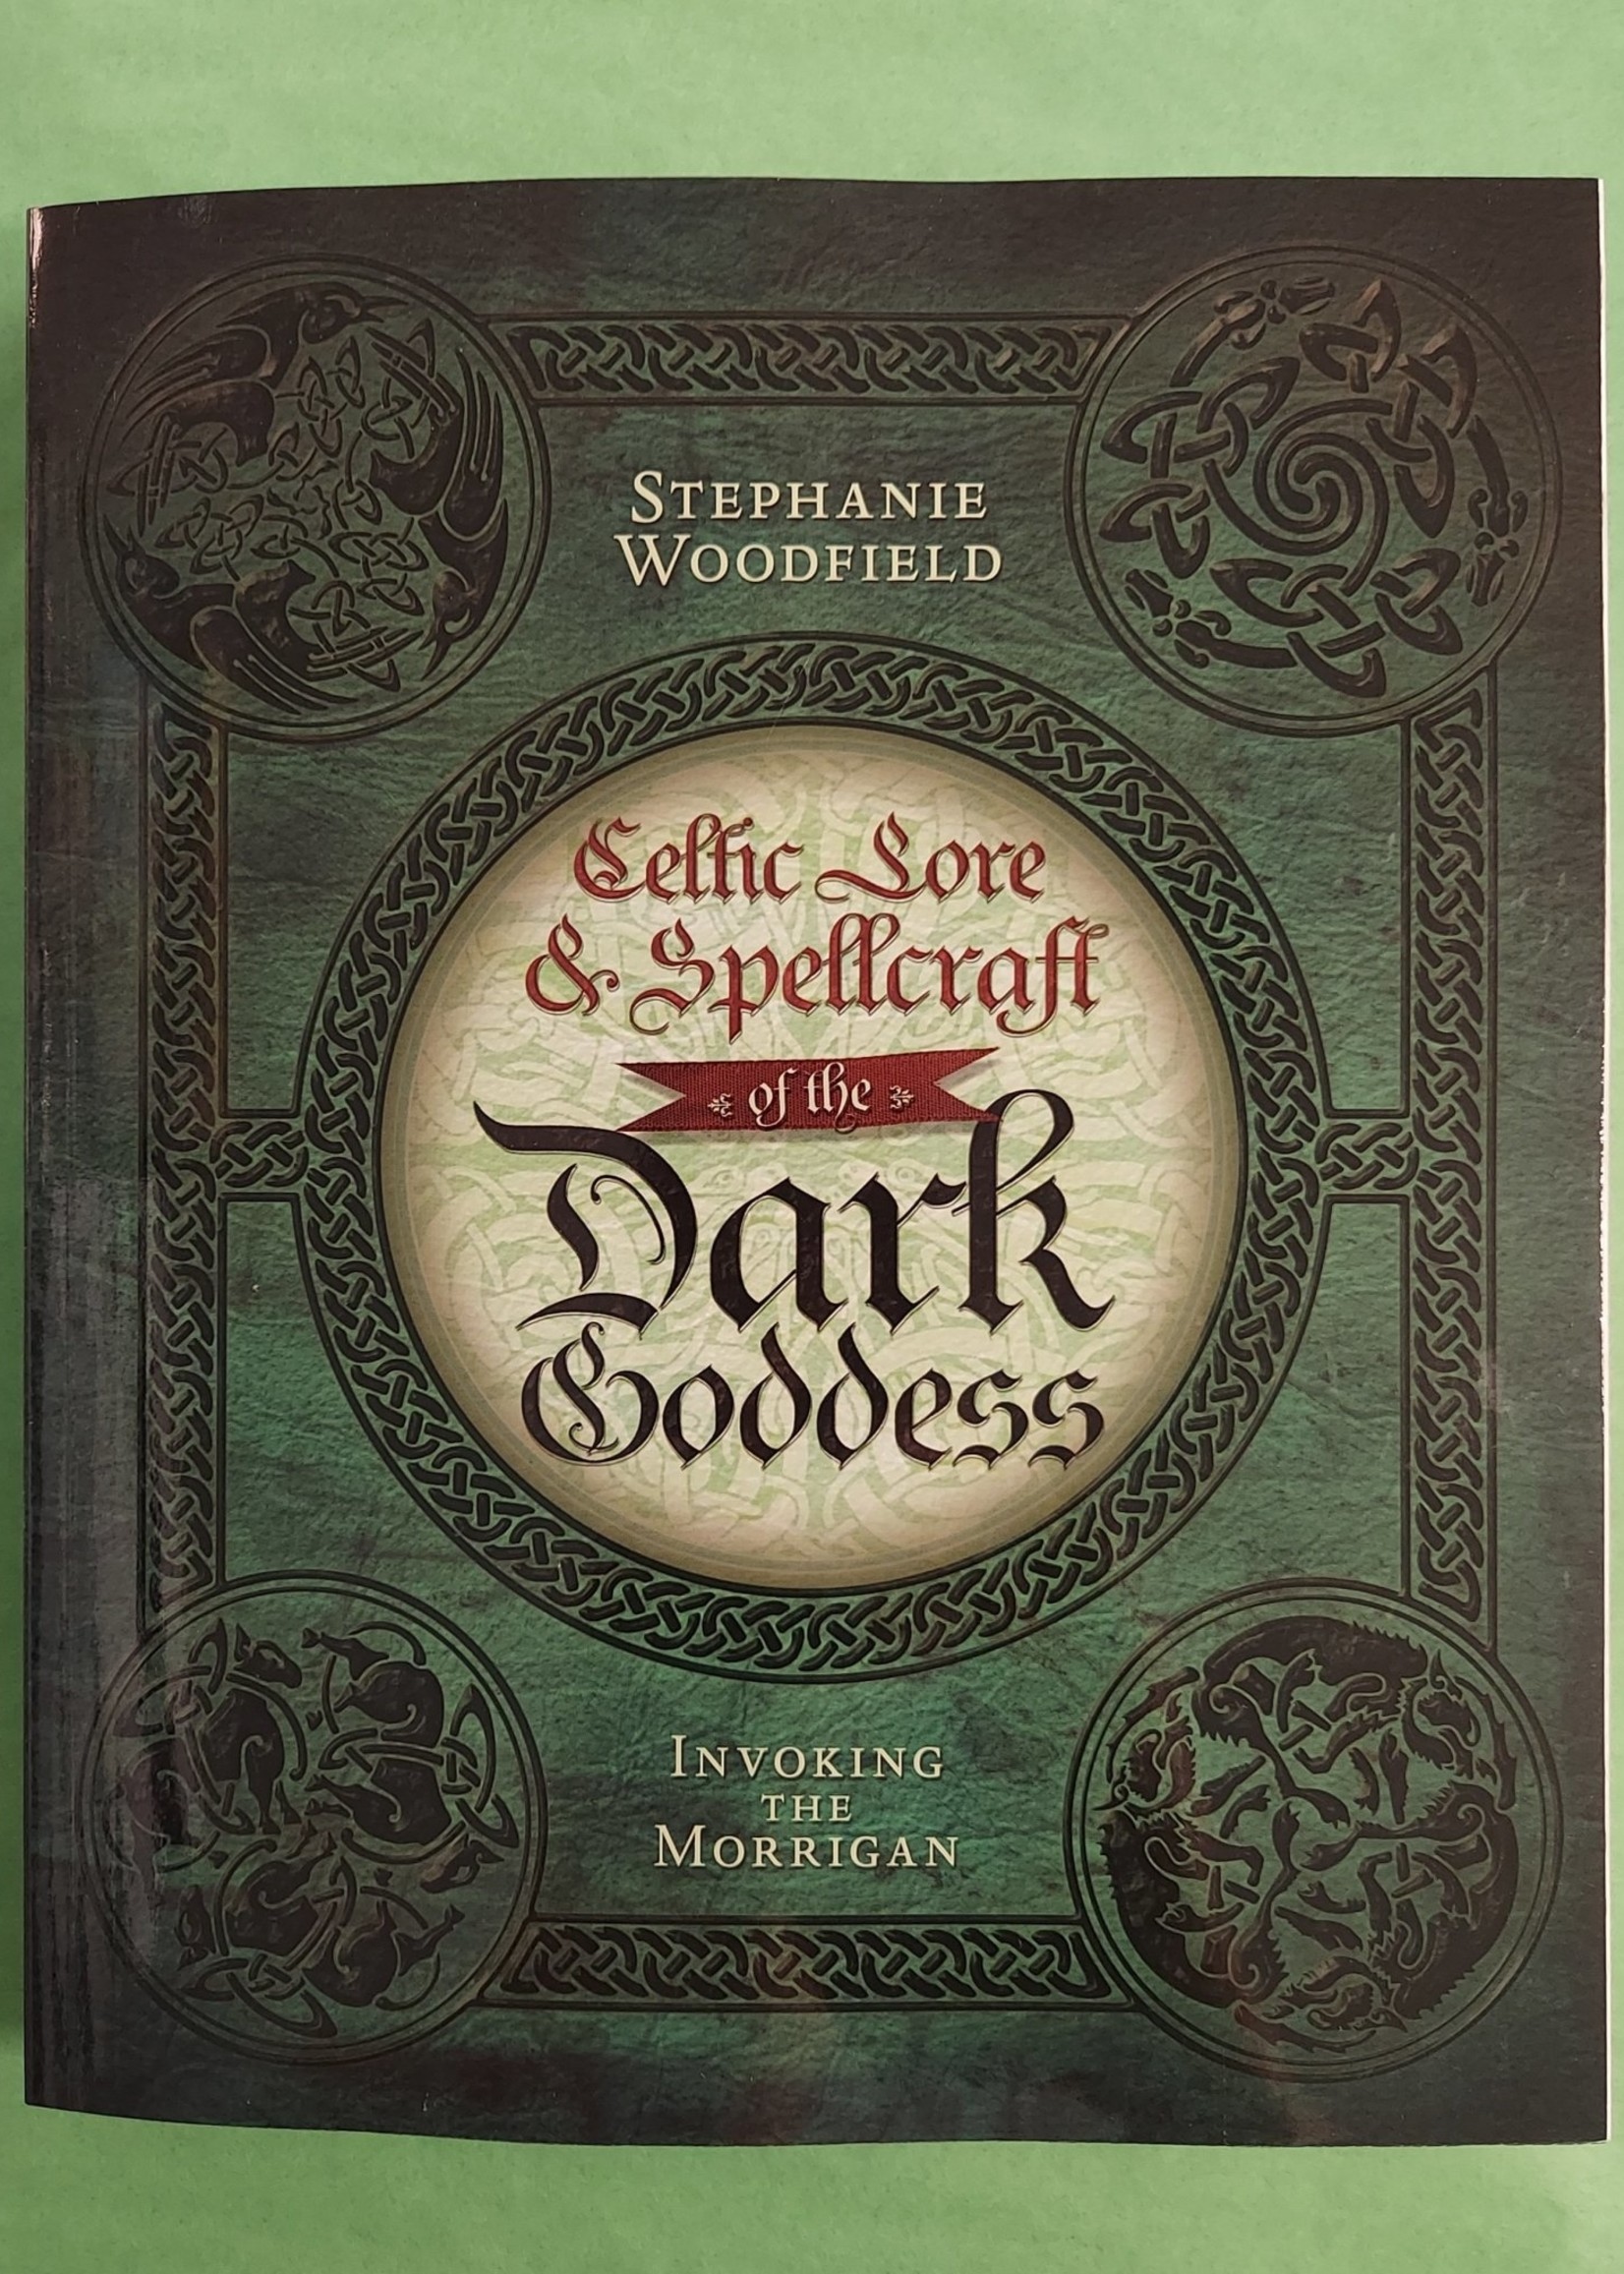 Celtic Lore & Spellcraft of the Dark Goddess-BY STEPHANIE WOODFIELD